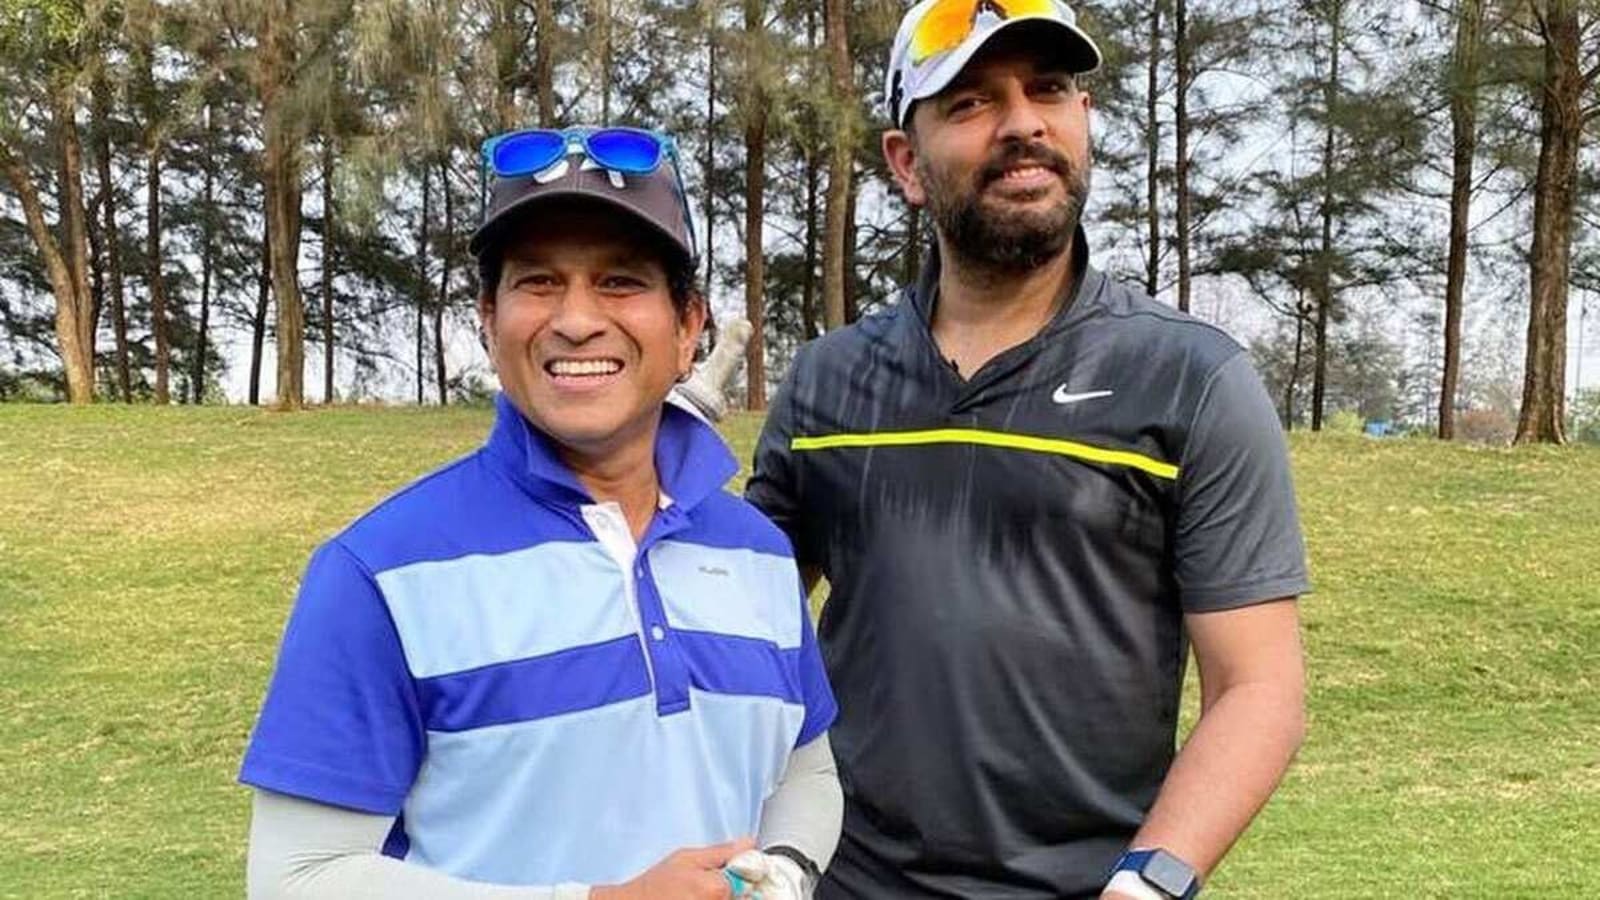 Sachin Tendulkar, Yuvraj Singh go golfing together, picture goes viral | Cricket - Hindustan Times